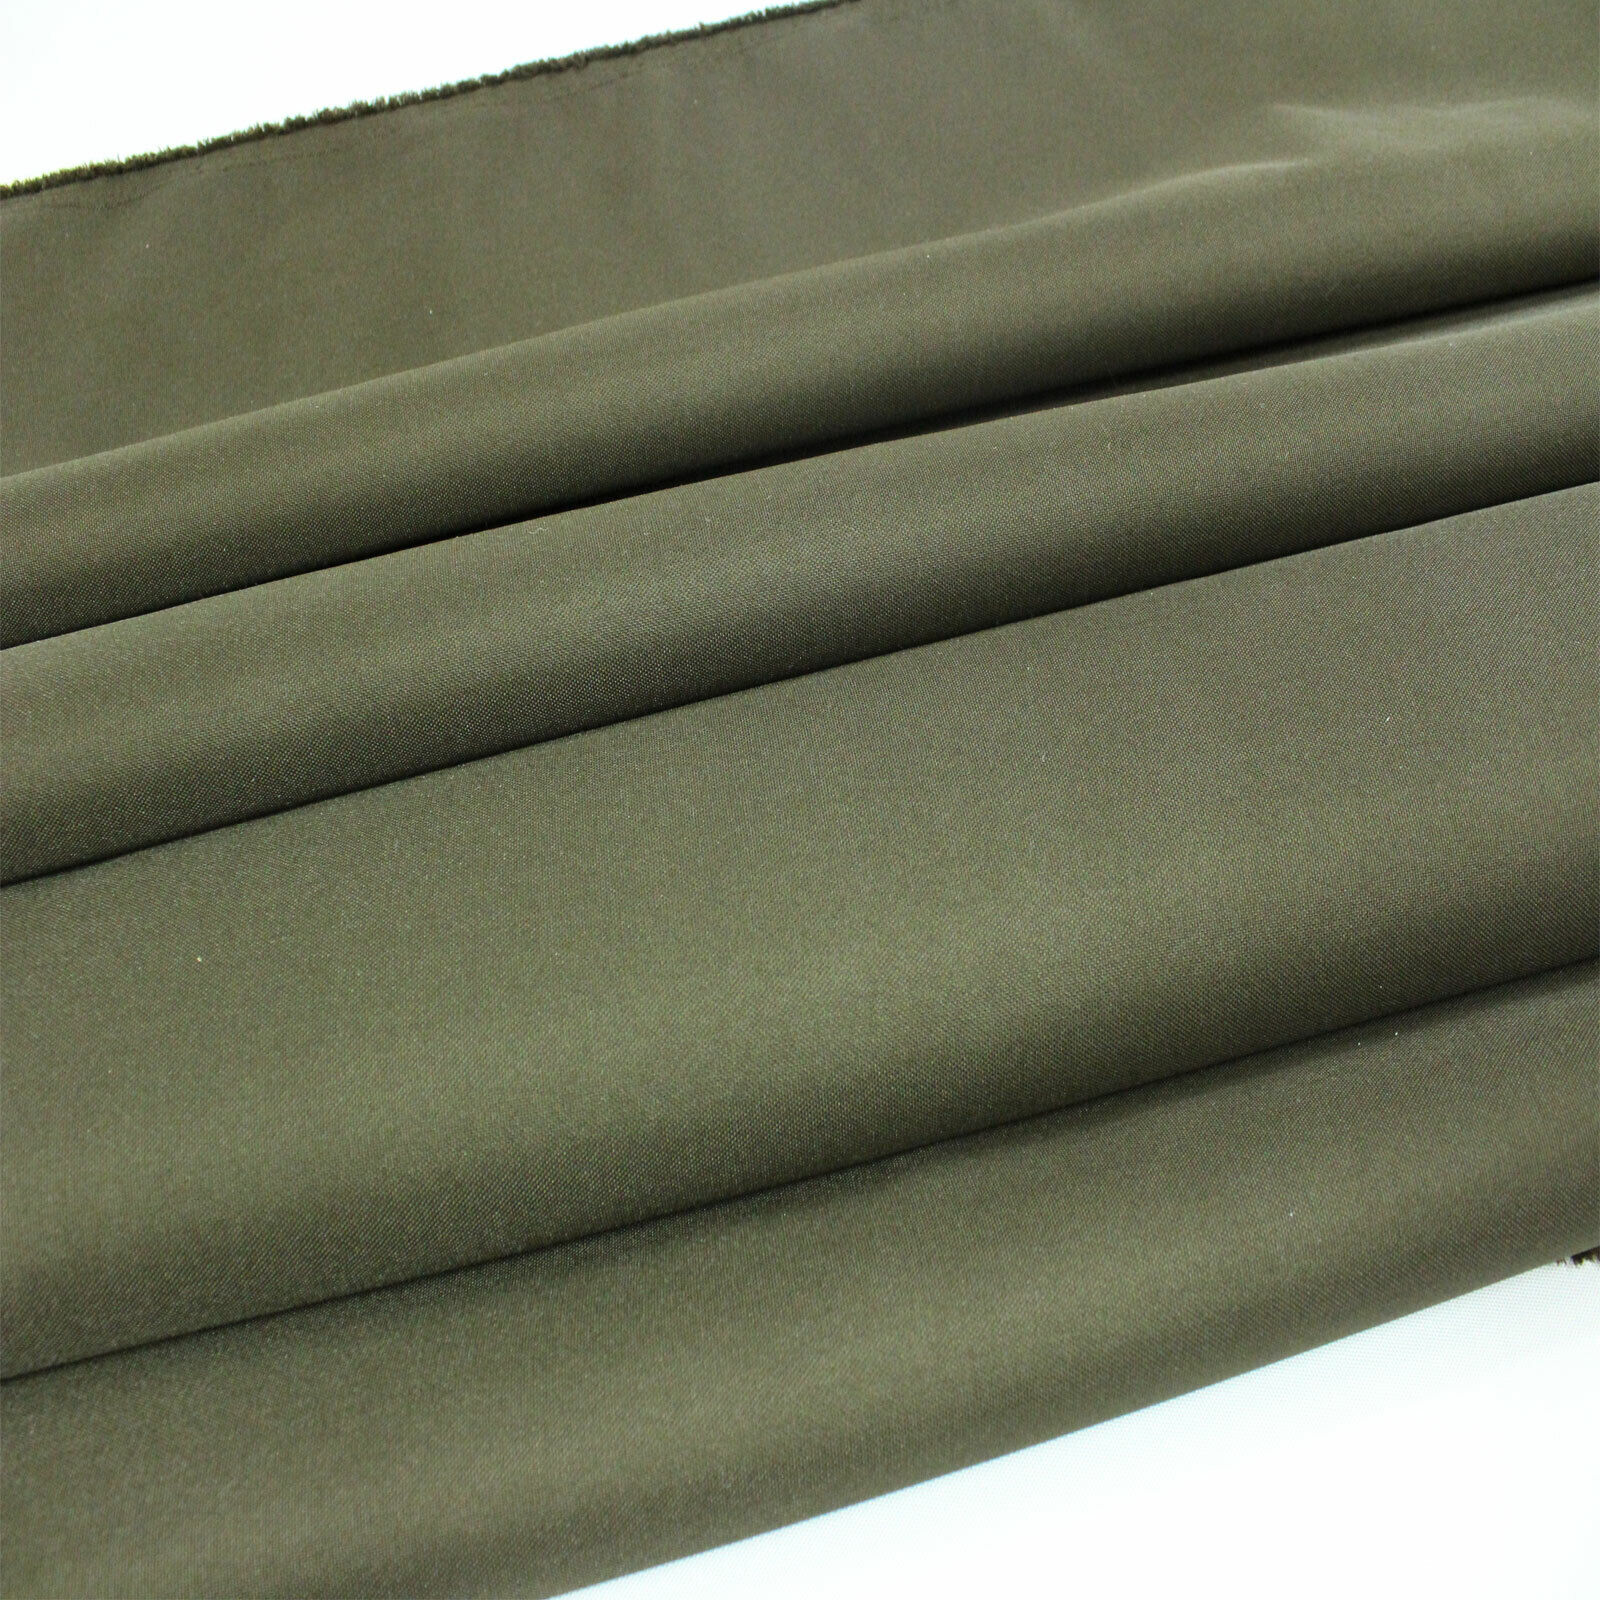 Marine Waterproof Canvas Fabric 600 Denier Blocks Heat and Reduce Glare 24color